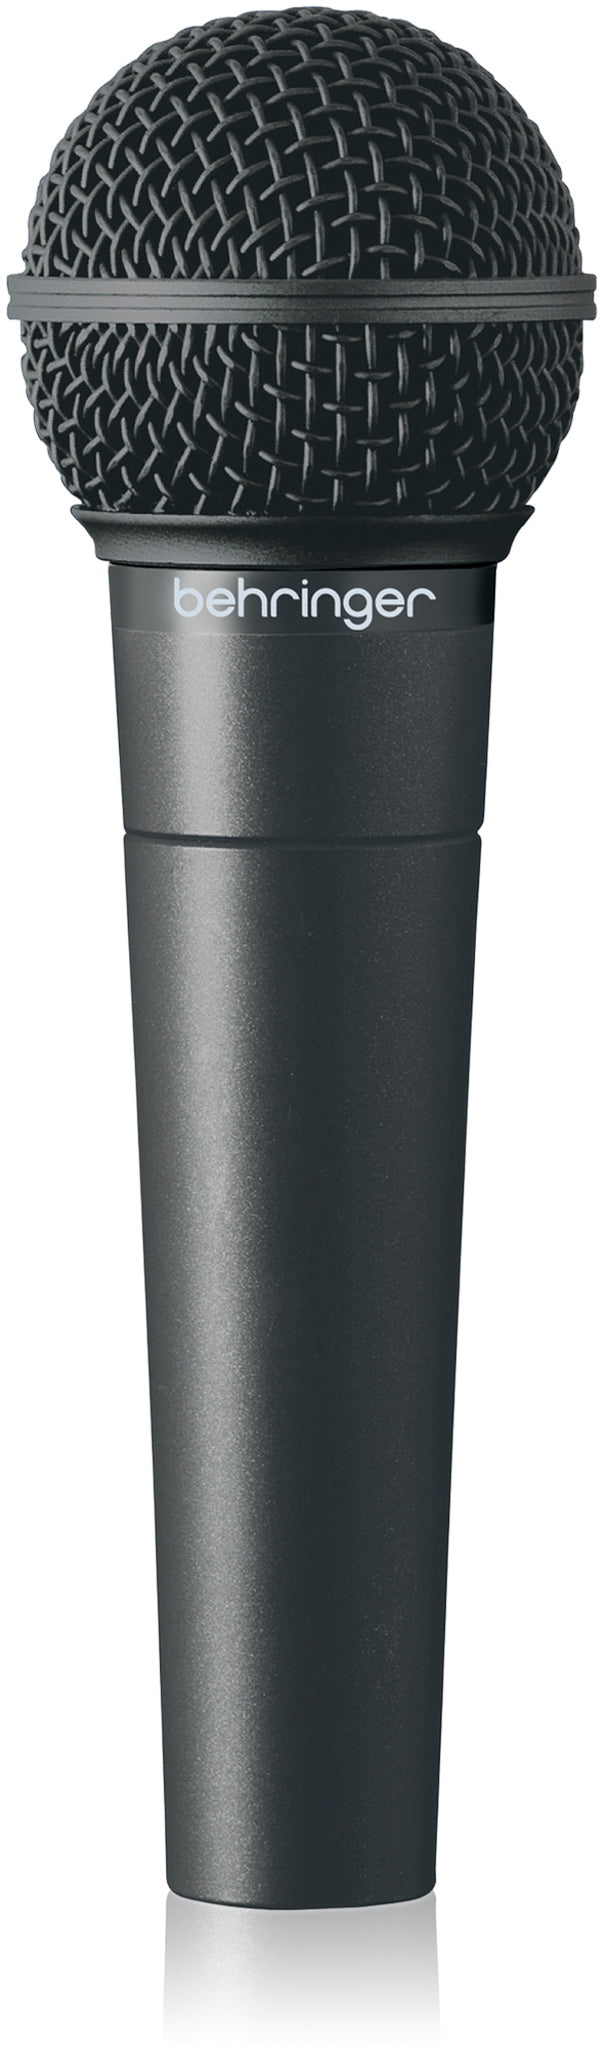 Behringer XM-8500 Dynamic Microphone